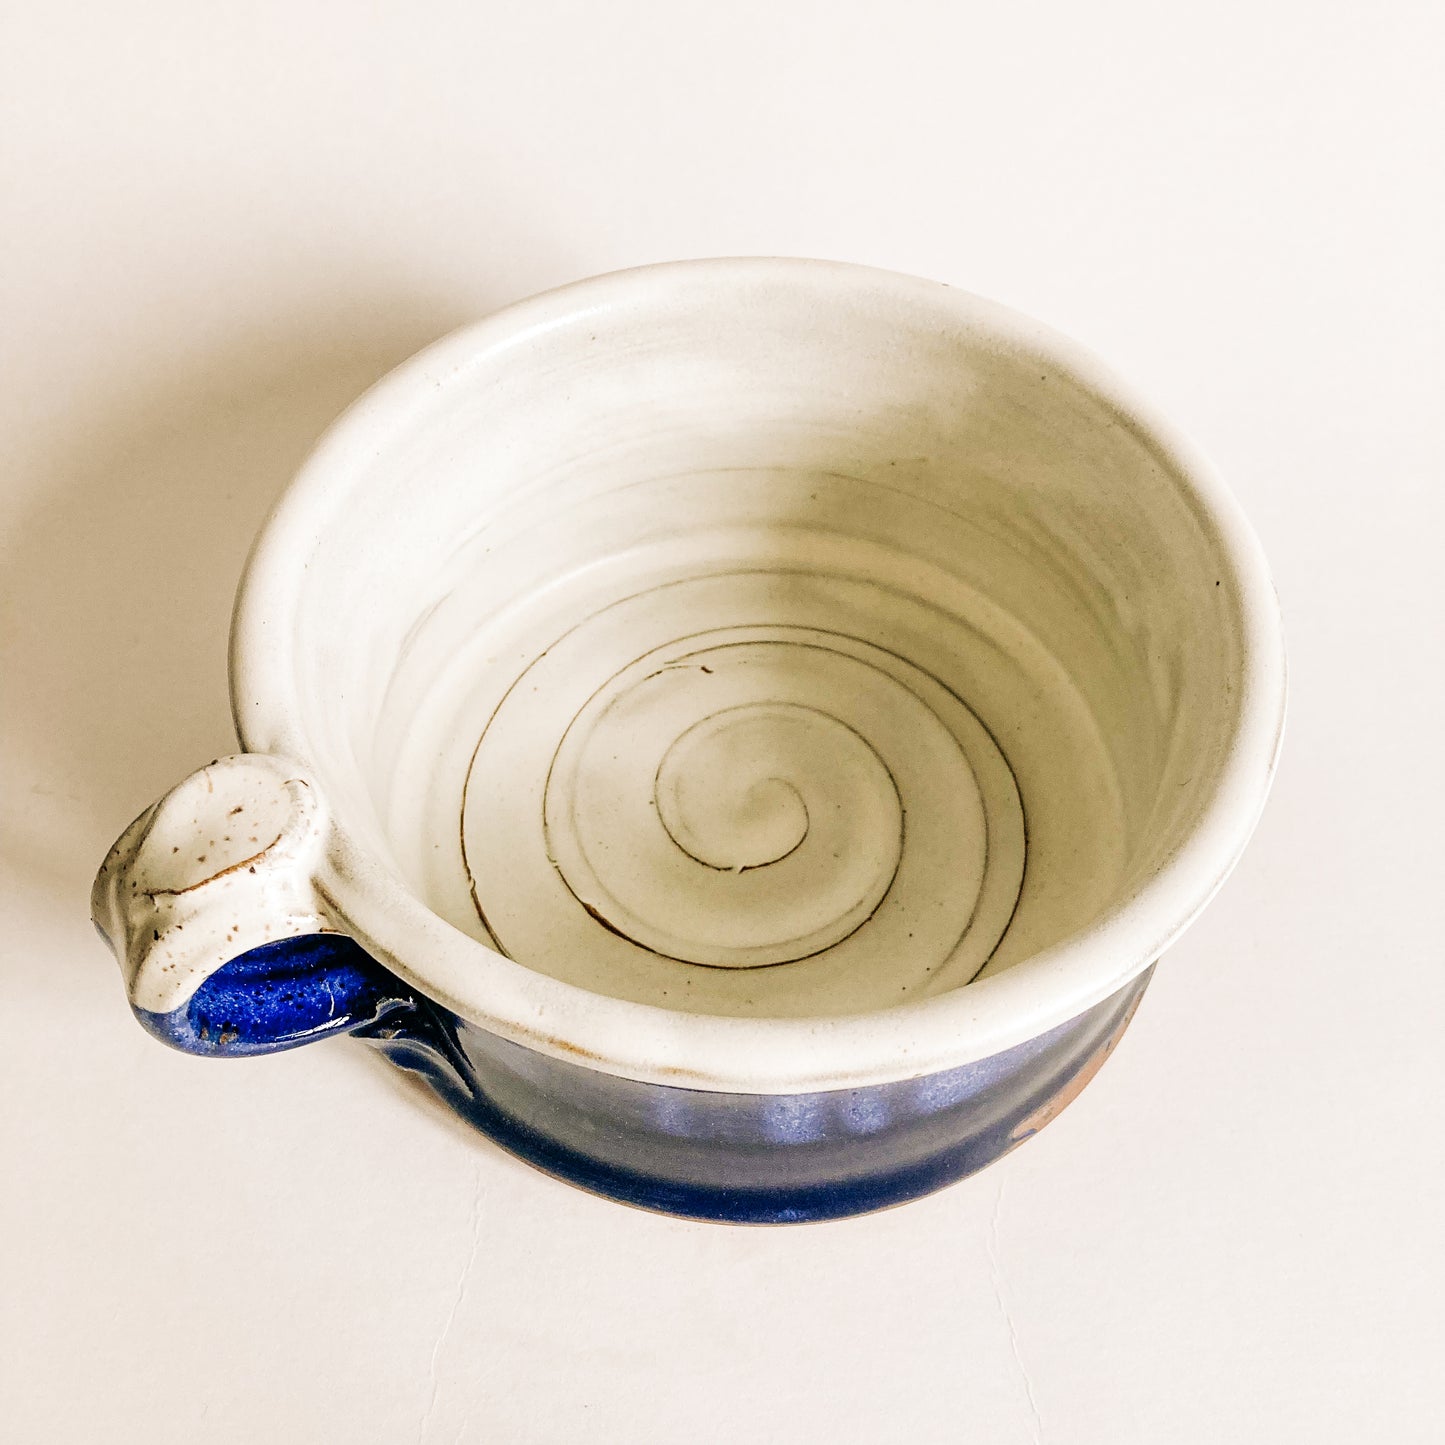 Blue and White Soup Mug